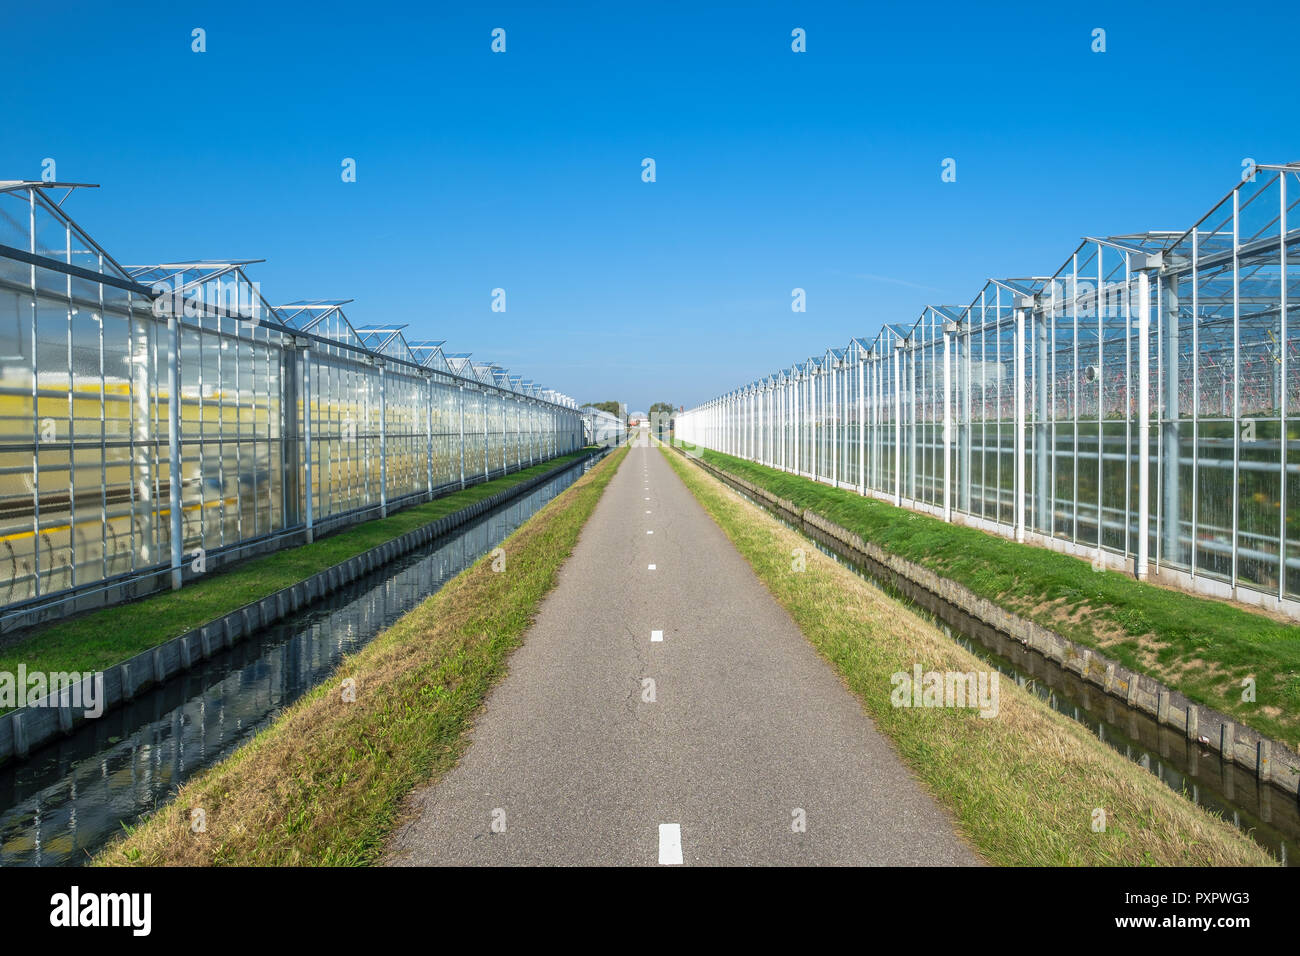 Vista en perspectiva de invernaderos de cristal industrial en la Netehrlands. Foto de stock